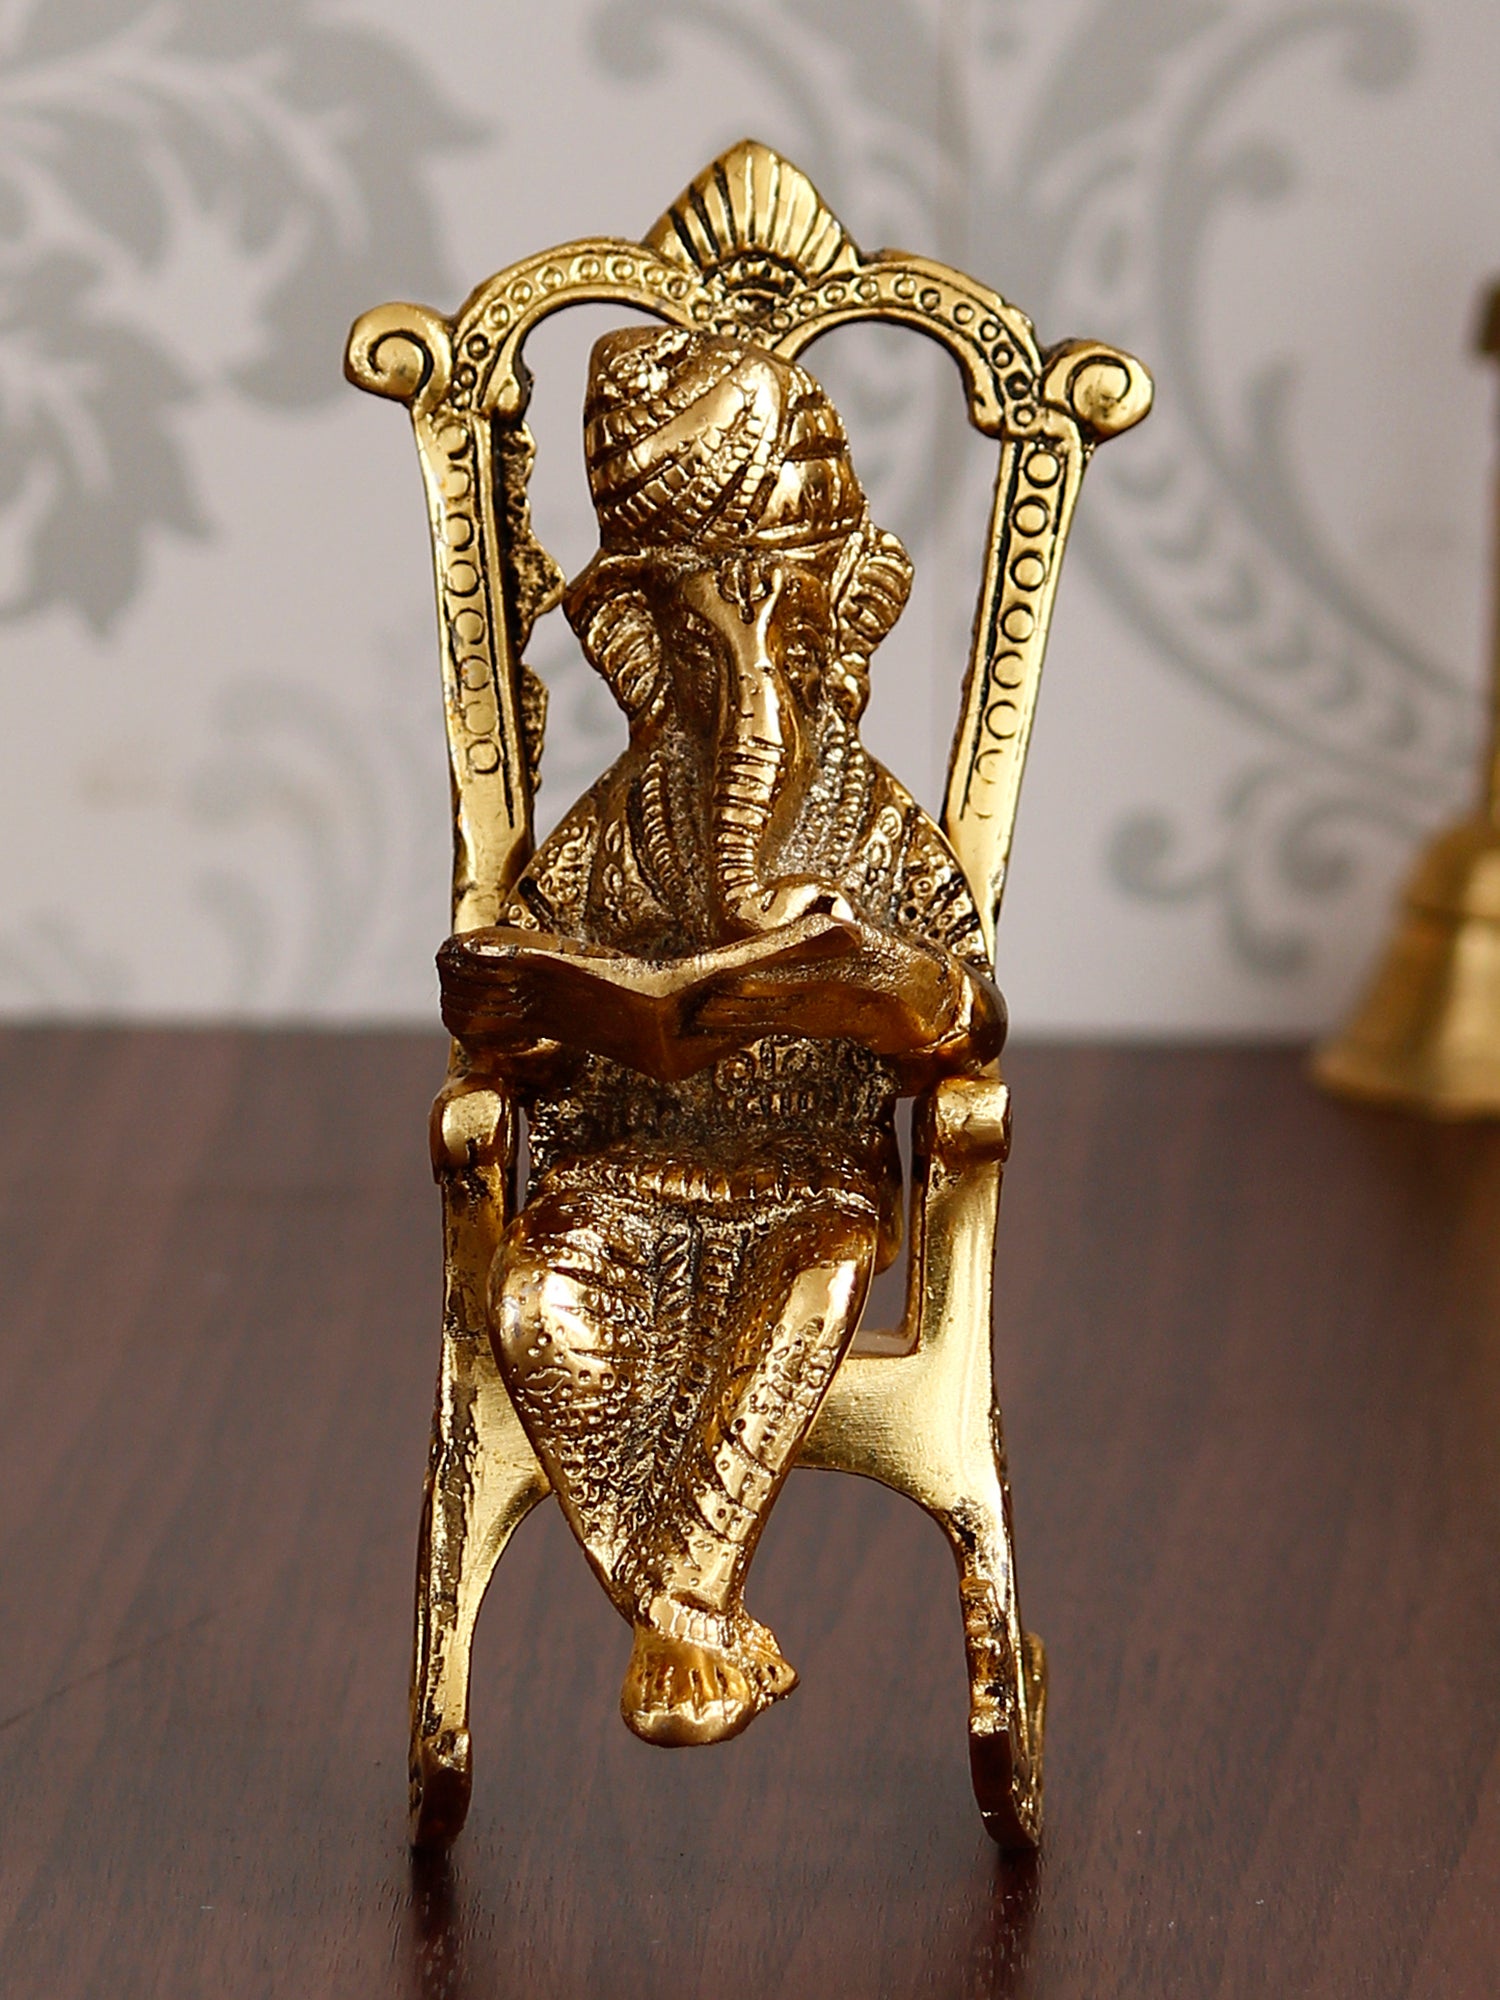 Golden Metal Lord Ganesha Idol Reading Book on Rocking Chair